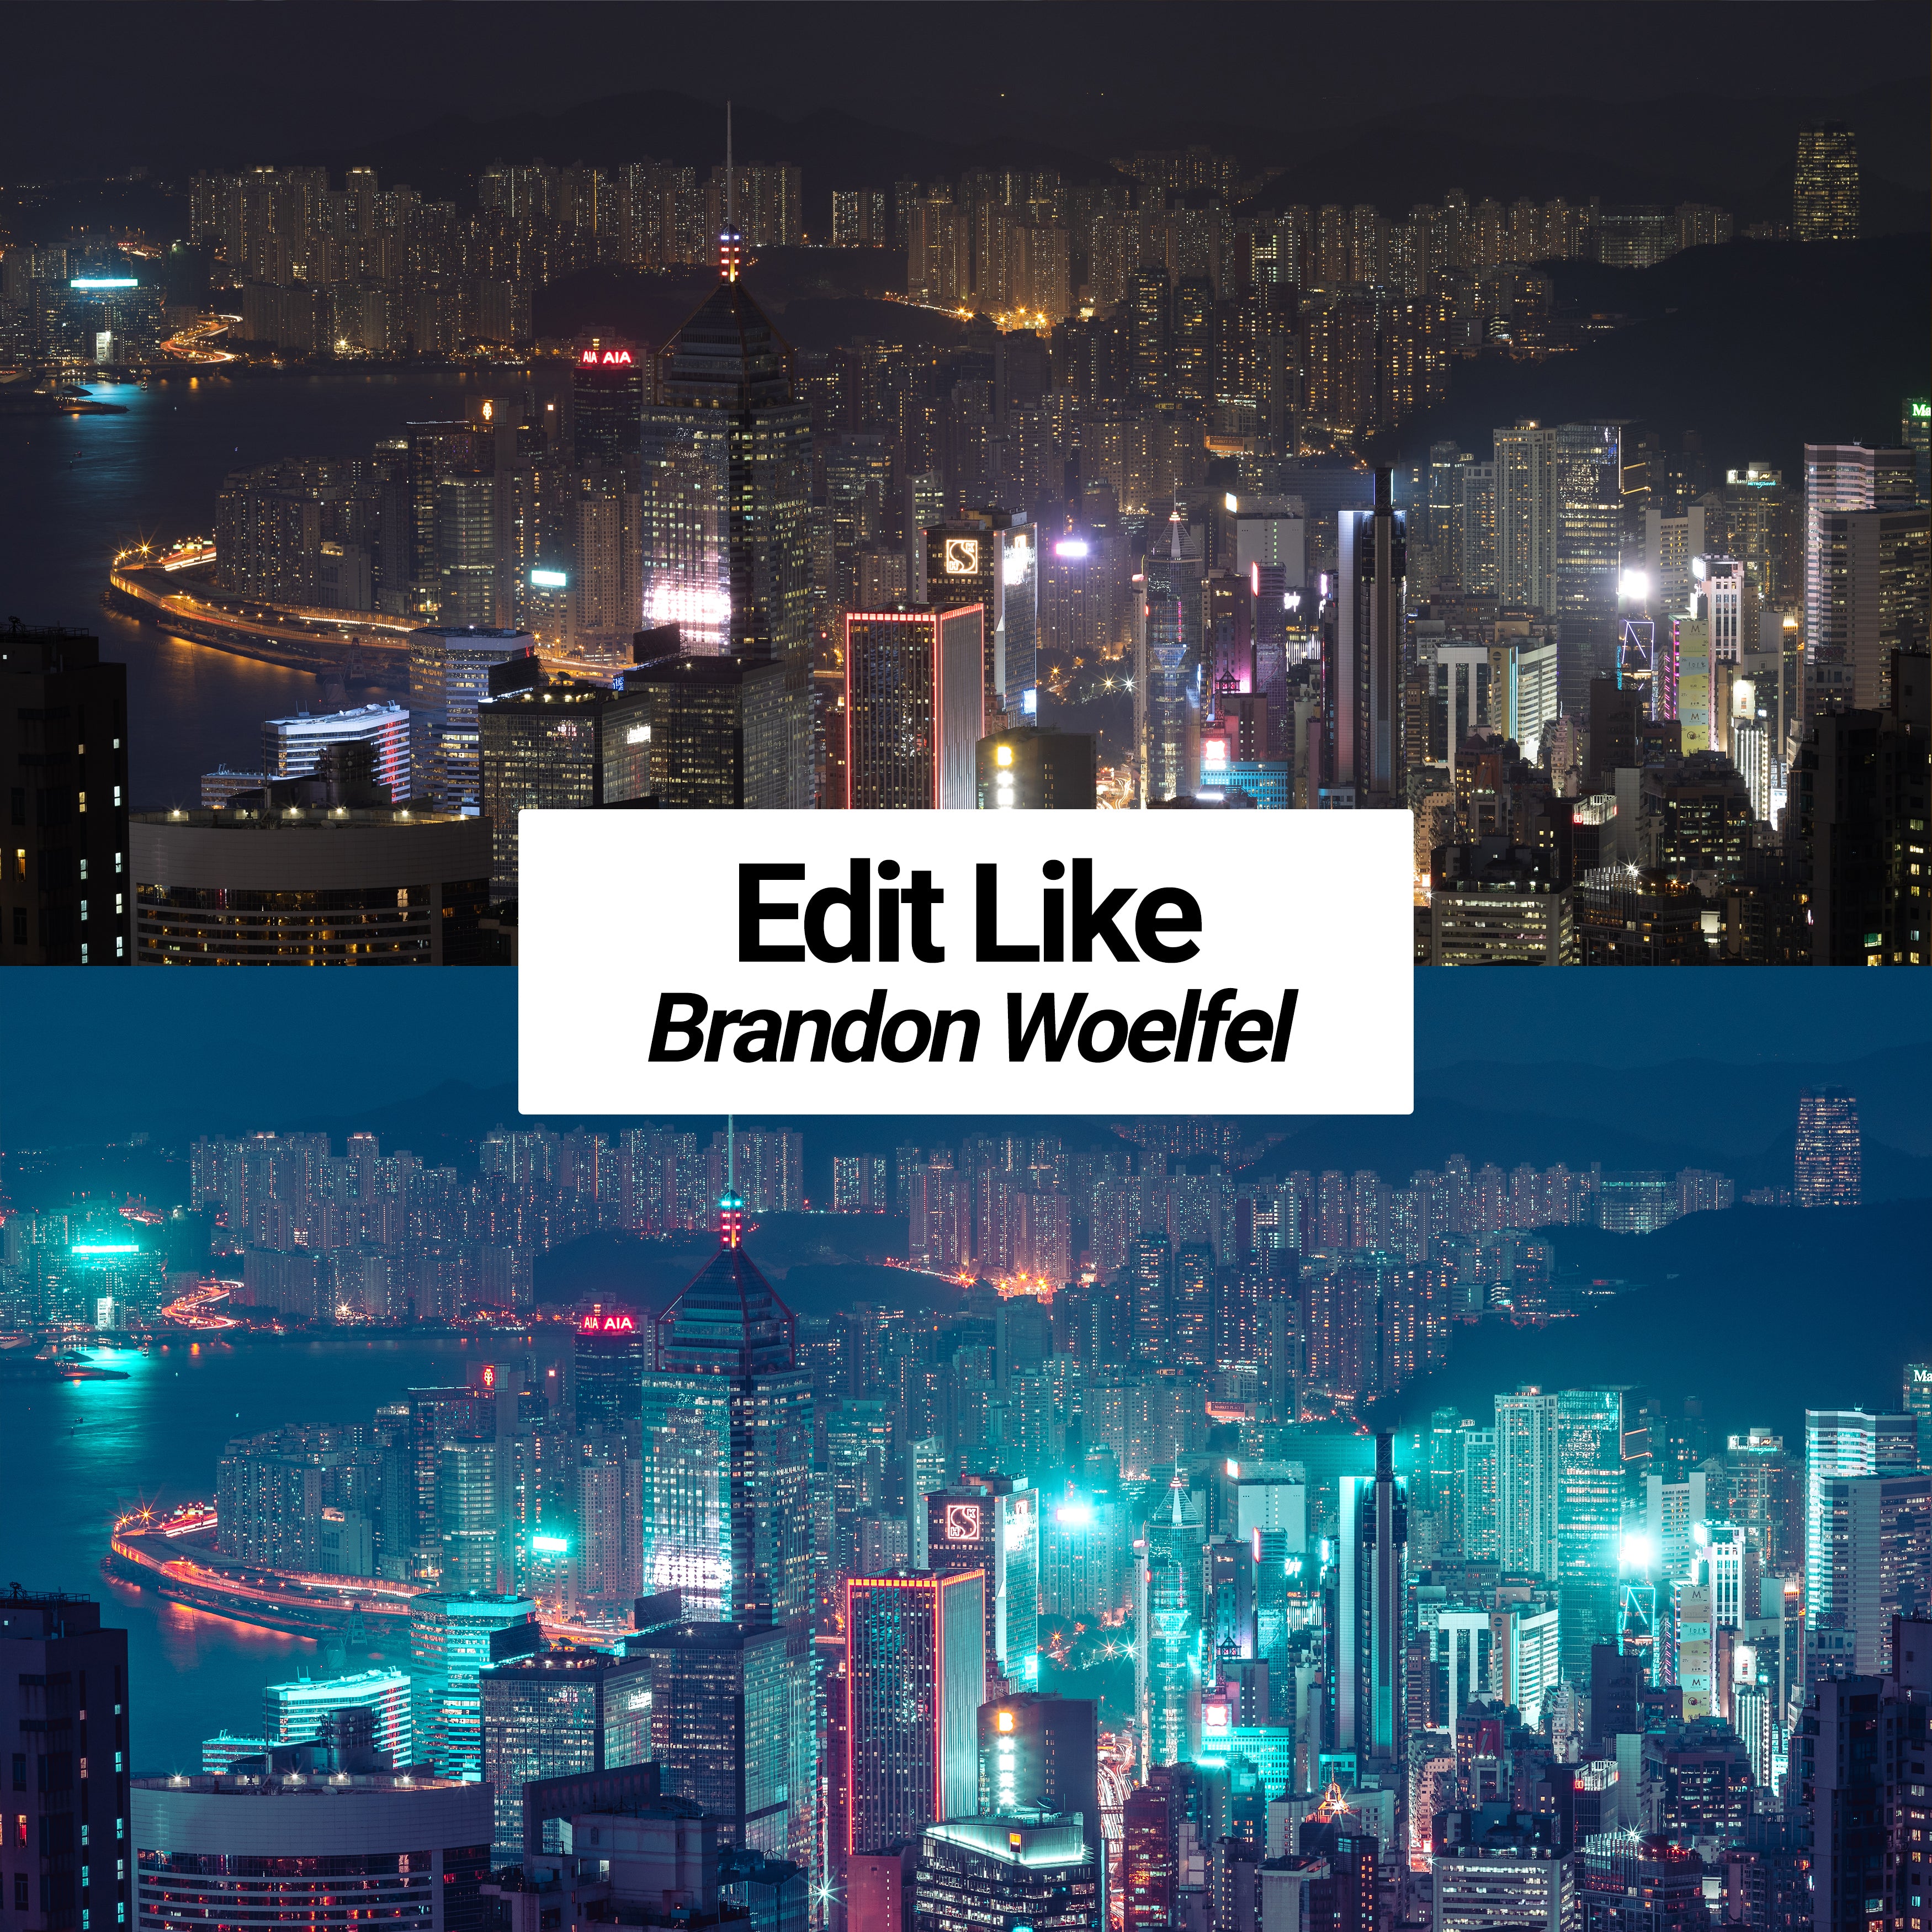 Edit Like - Lightroom Preset Bundle | 50+ Premium Presets